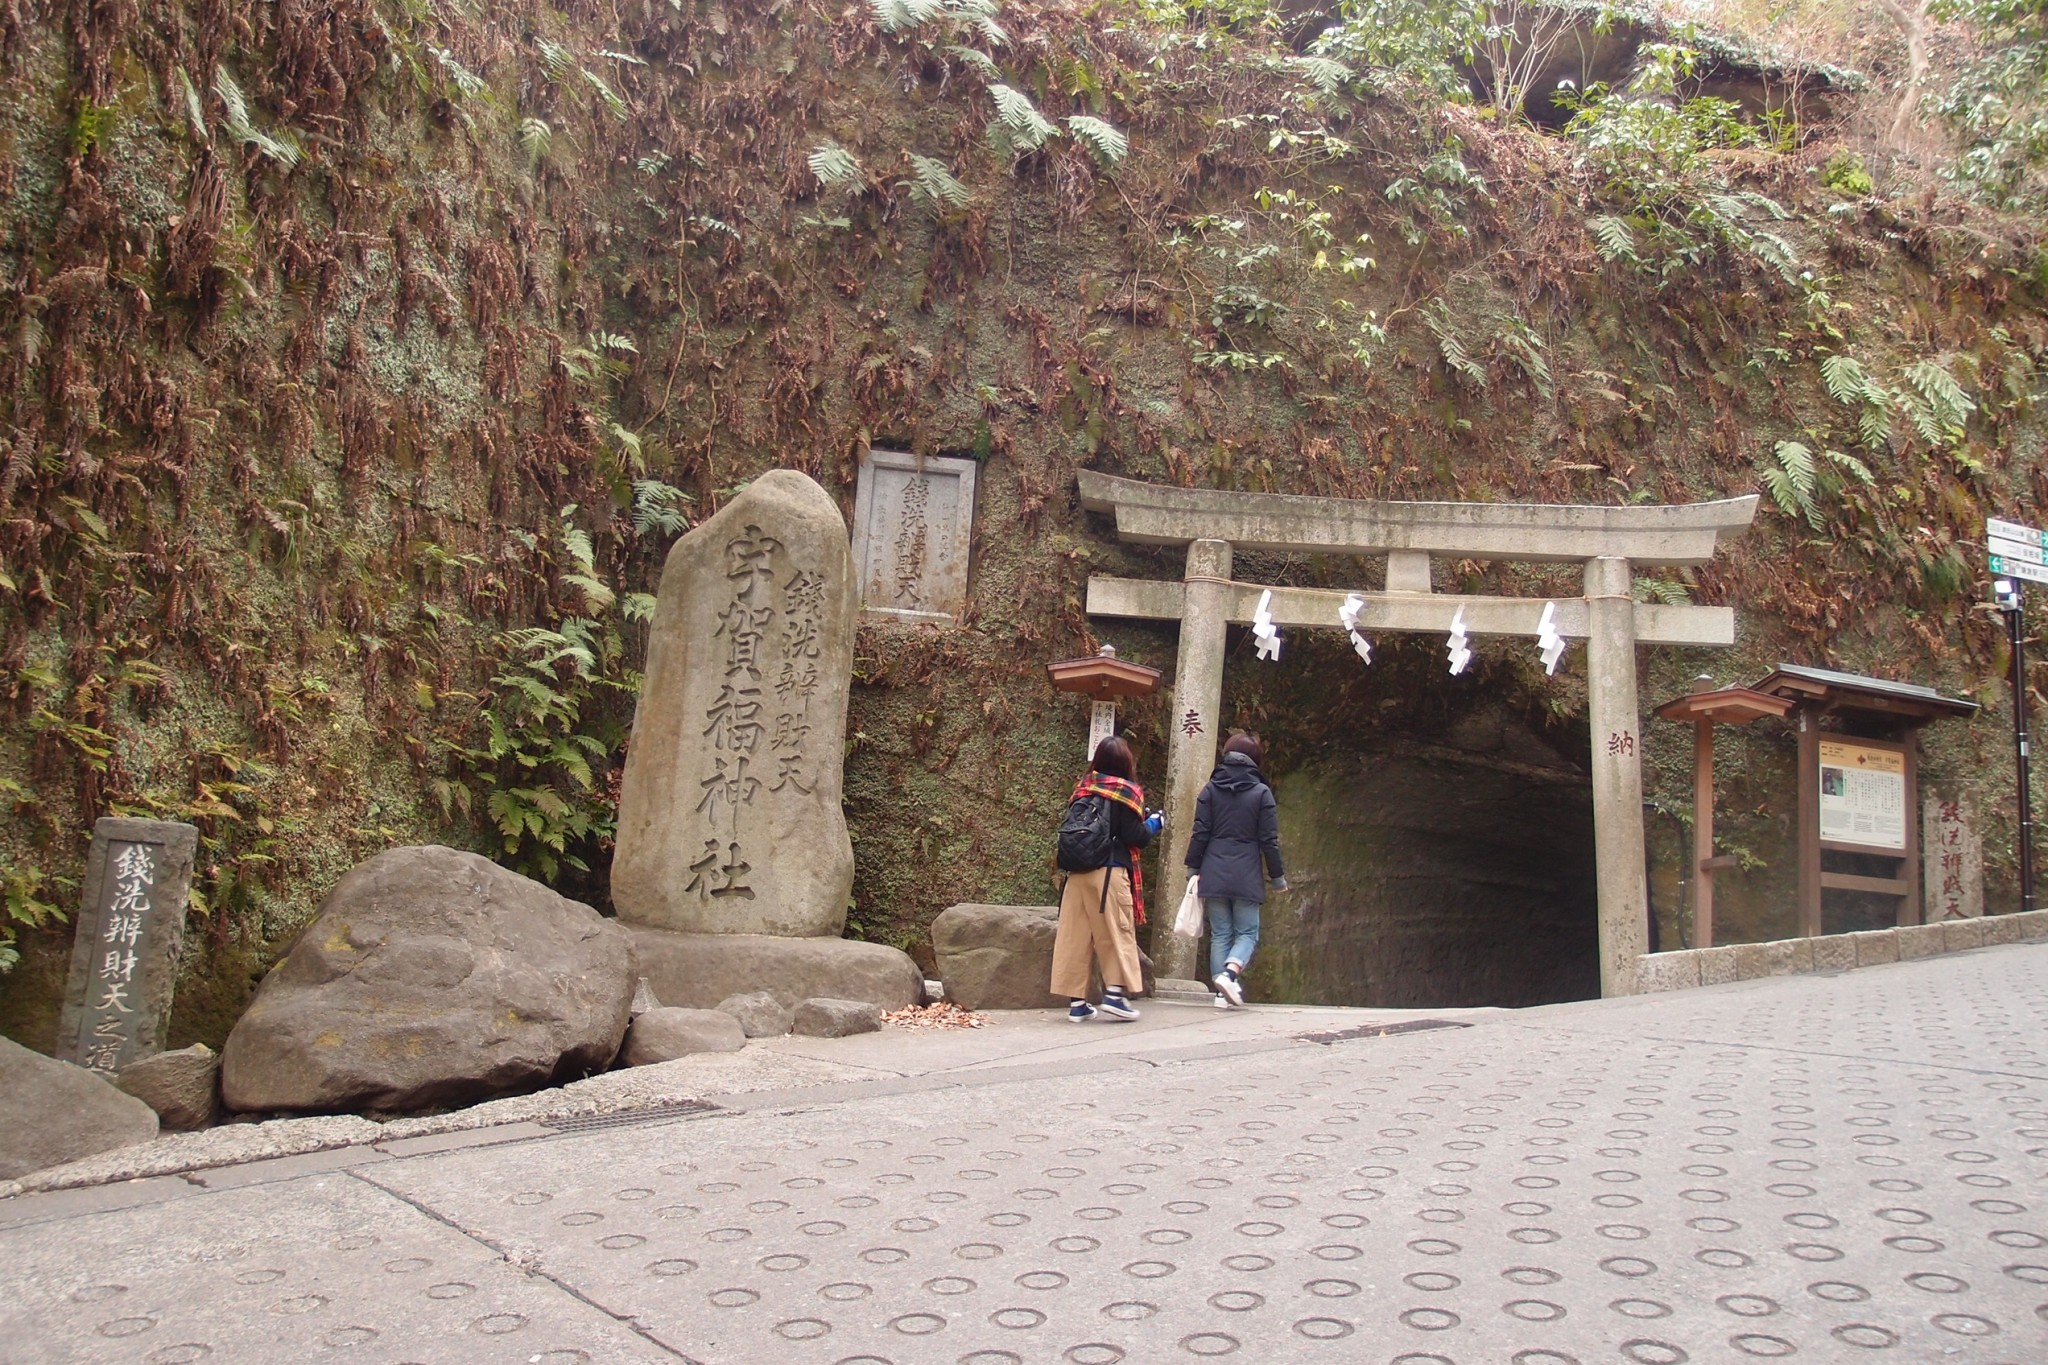 The shrine entry, Kuzuharaoka shrine, Daibutsu hiking course Kamakura